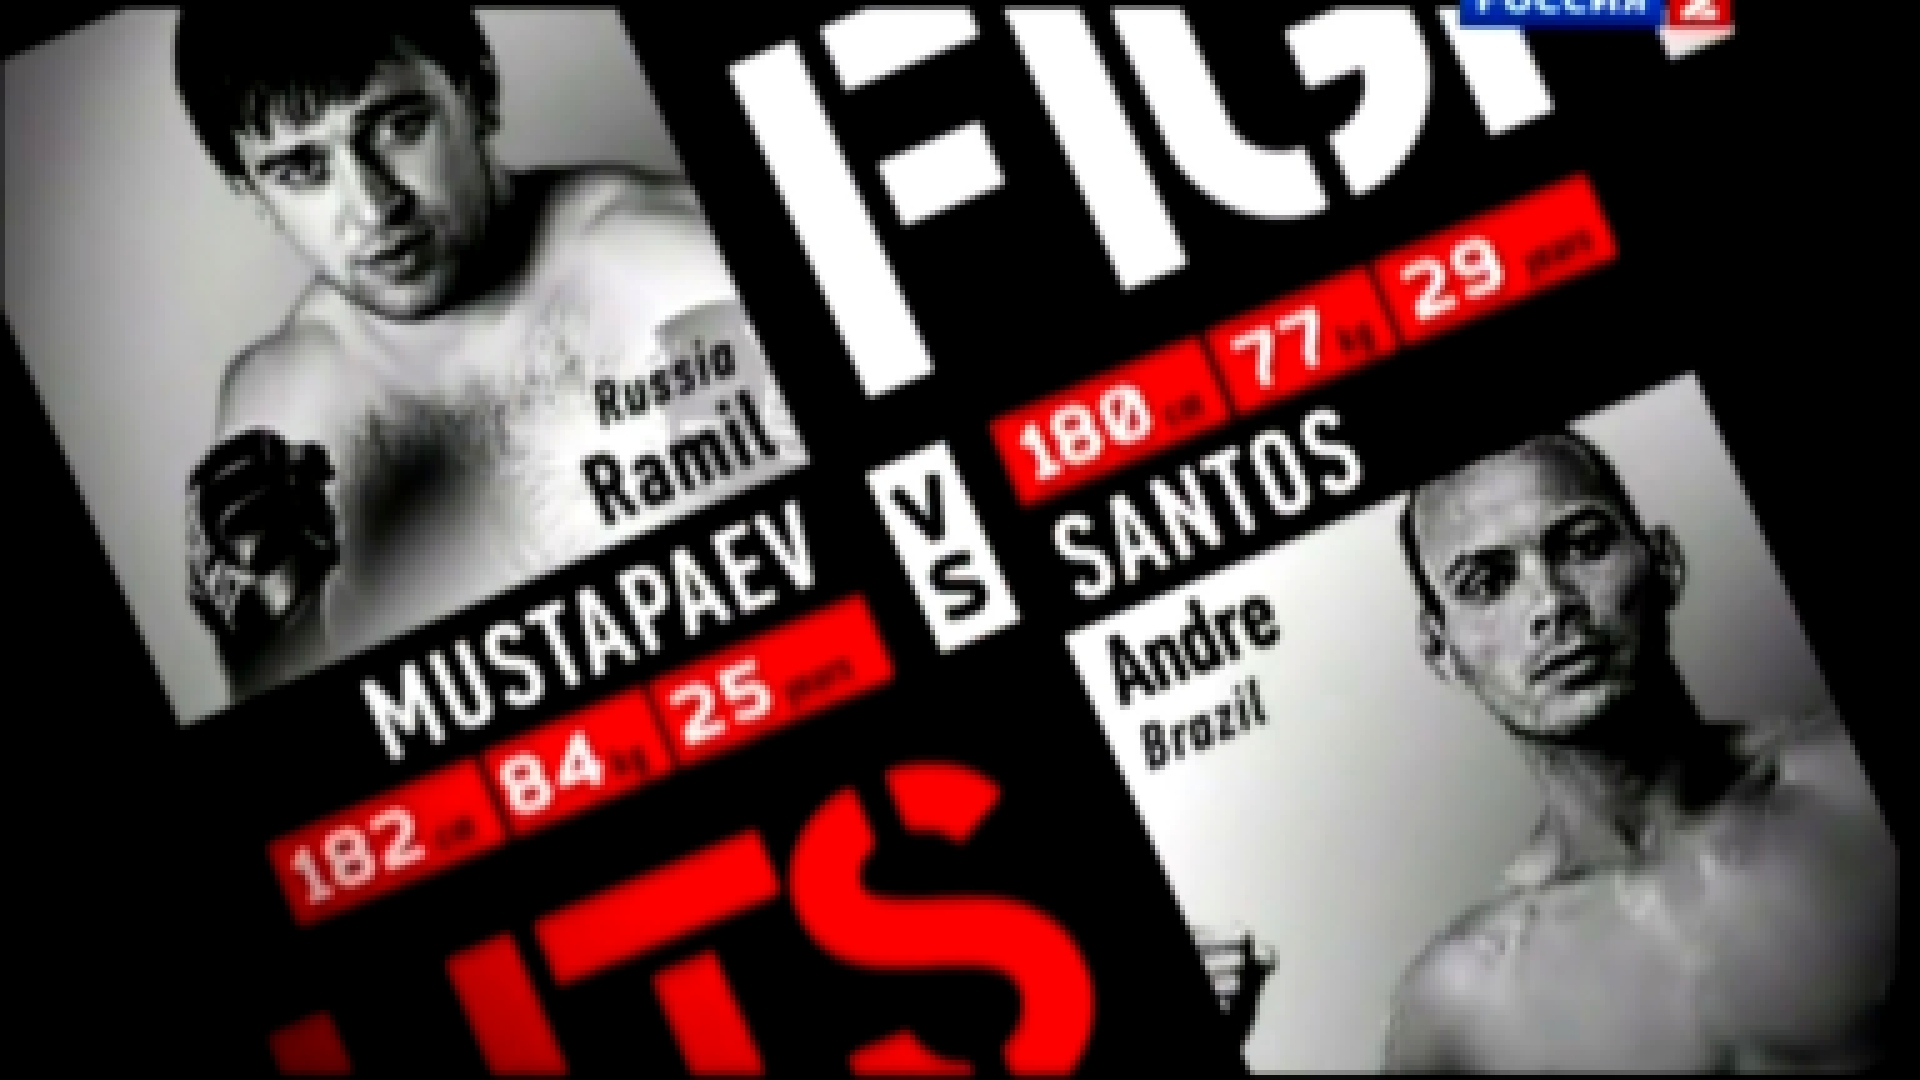 Ramil Mustapaev vs Andre Santos 